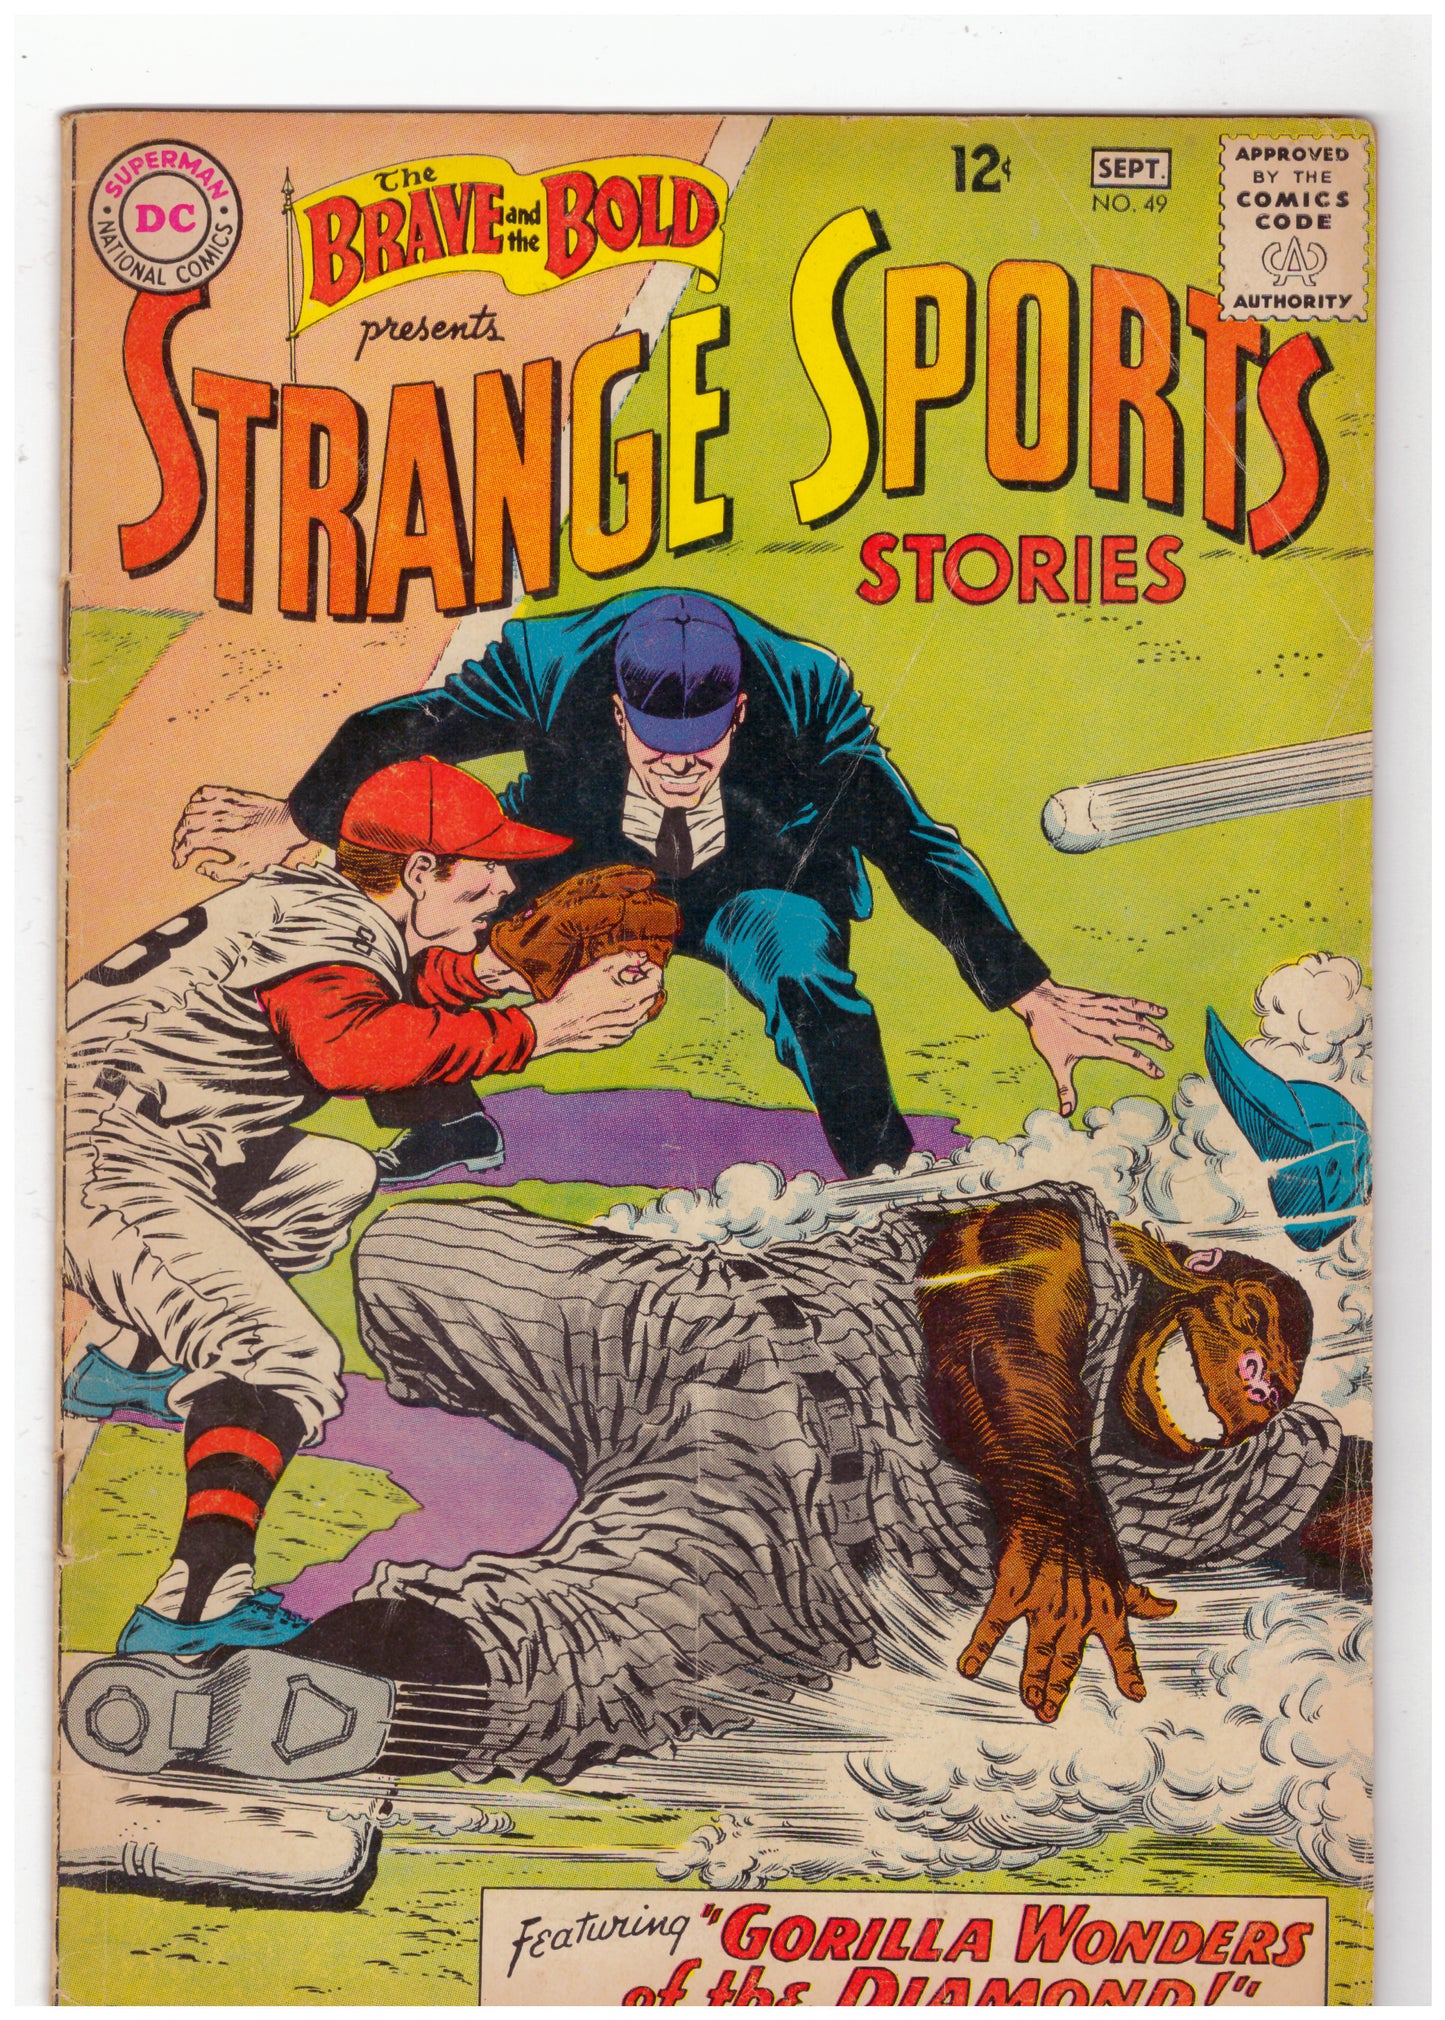 Strange Sports Stories #49